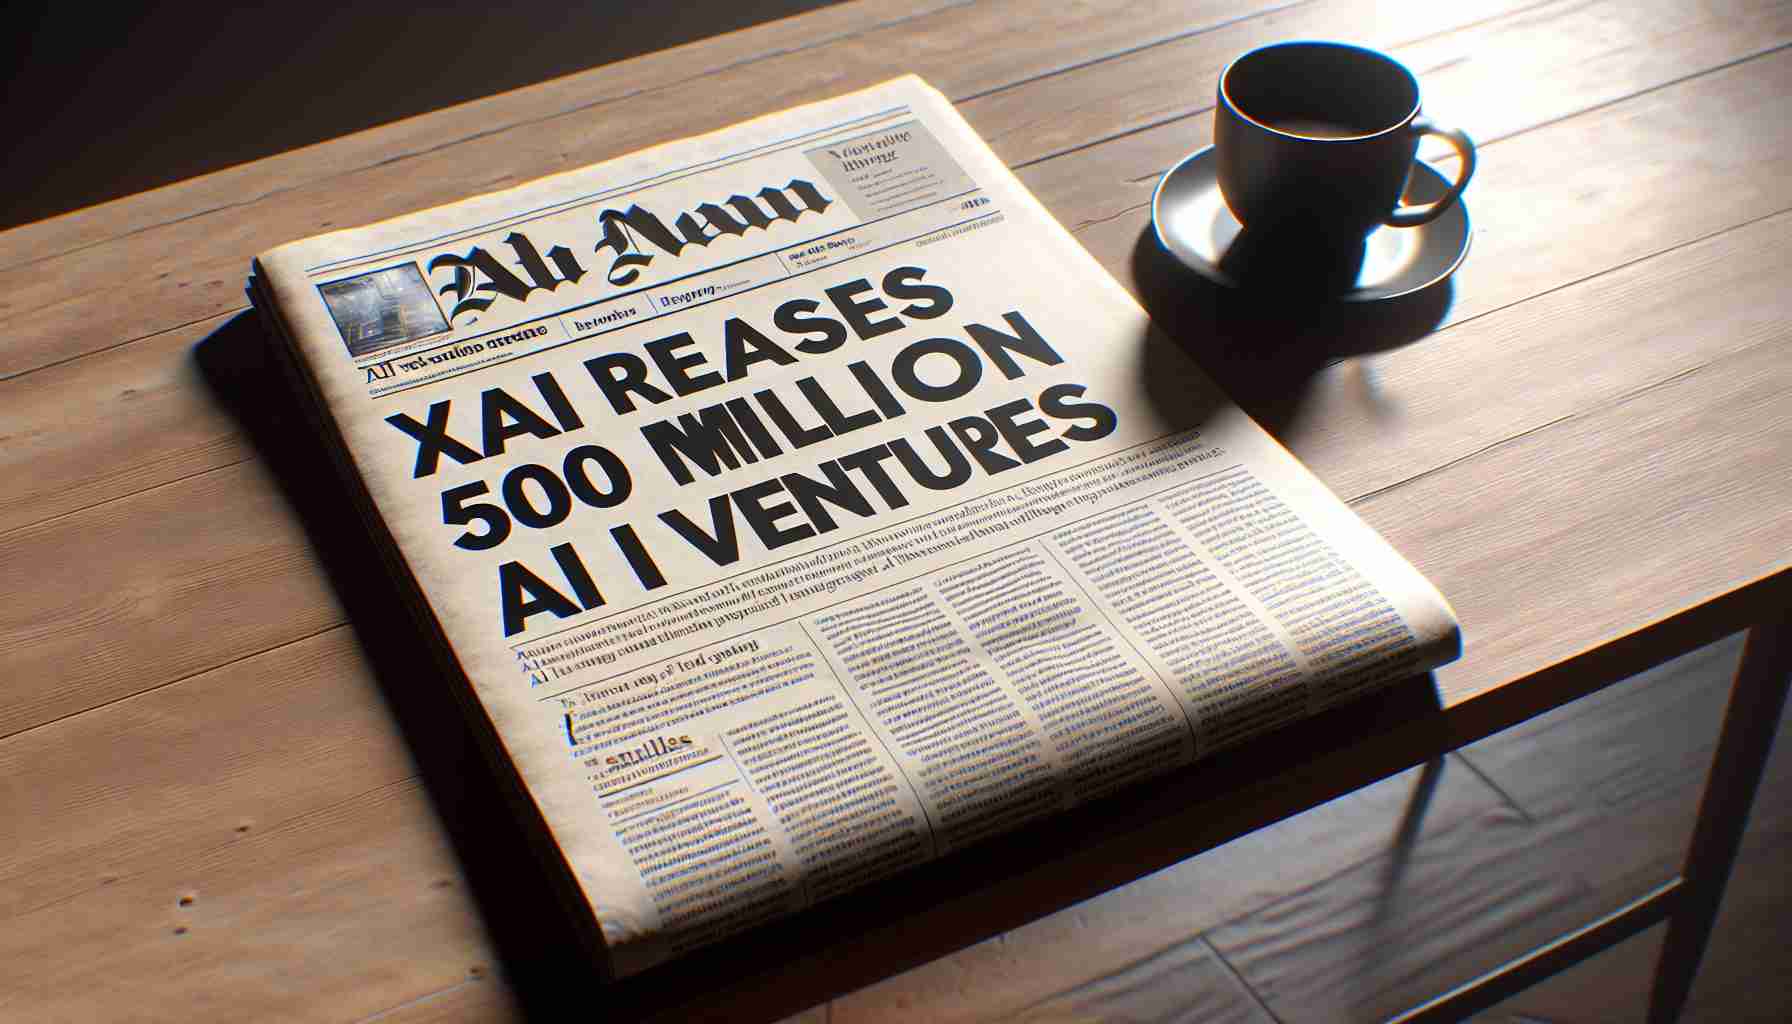 xAI Raises $500 Million in Funding for AI Ventures